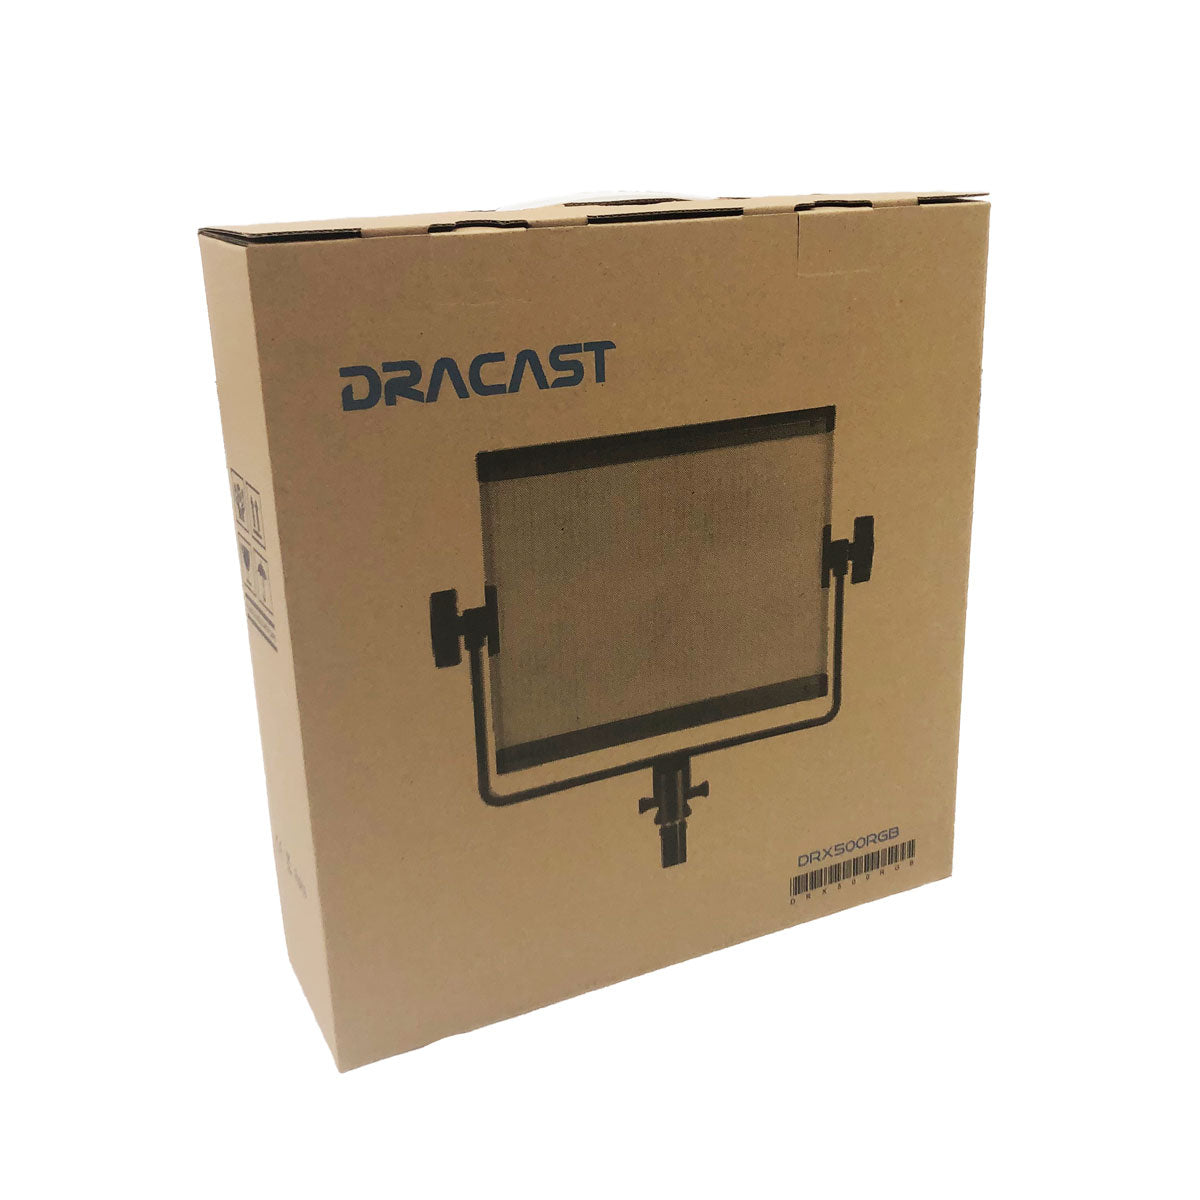 Dracast X Series LED500 RGB and Bi-Color LED 2 Light Kit with Nylon Padded Travel Case